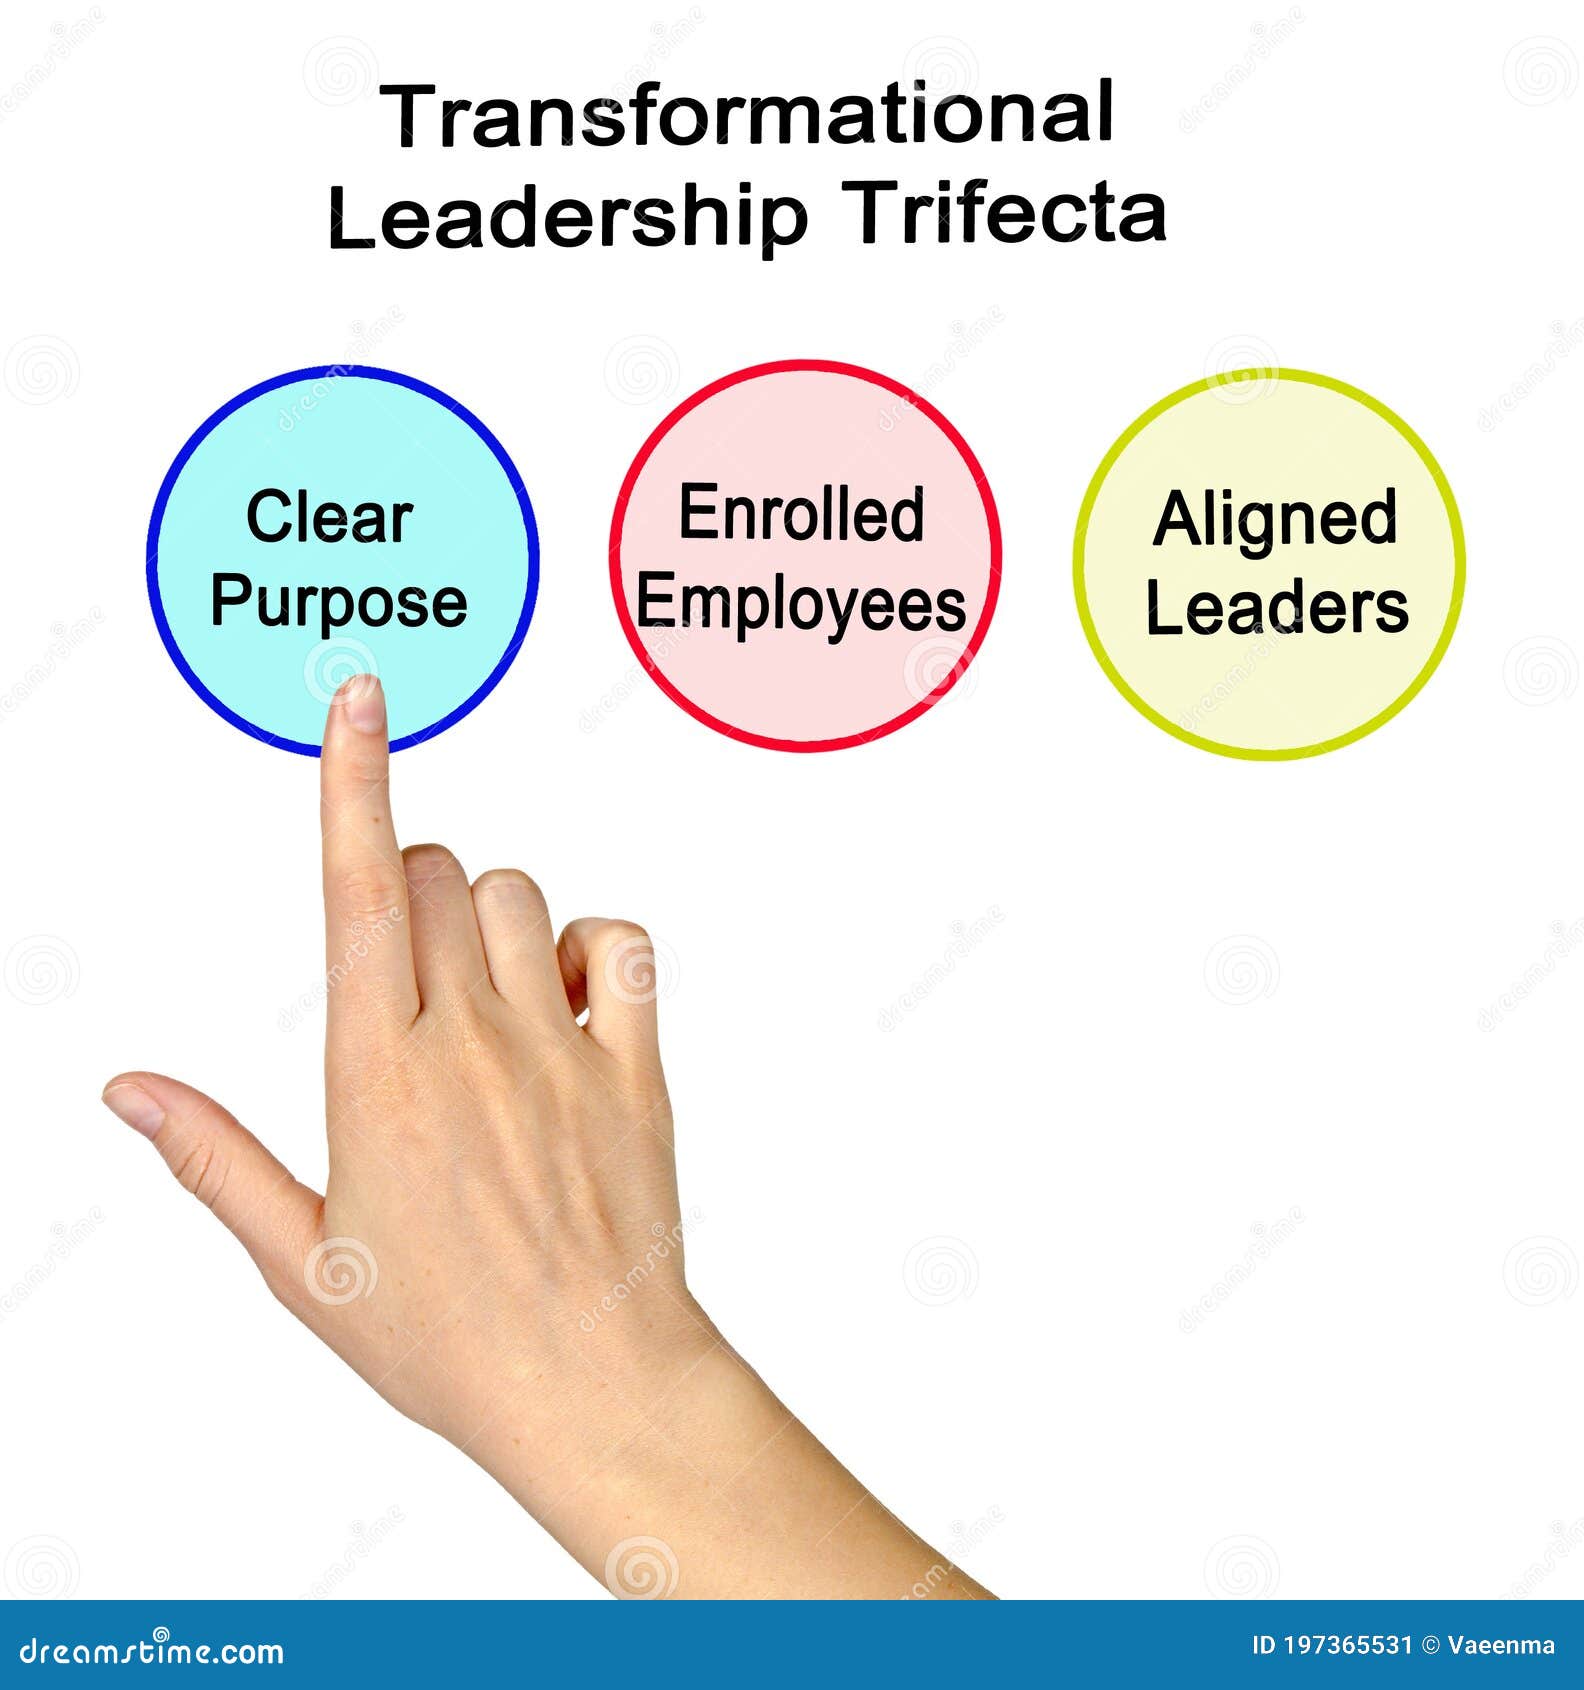 presenting transformational leadership trifecta